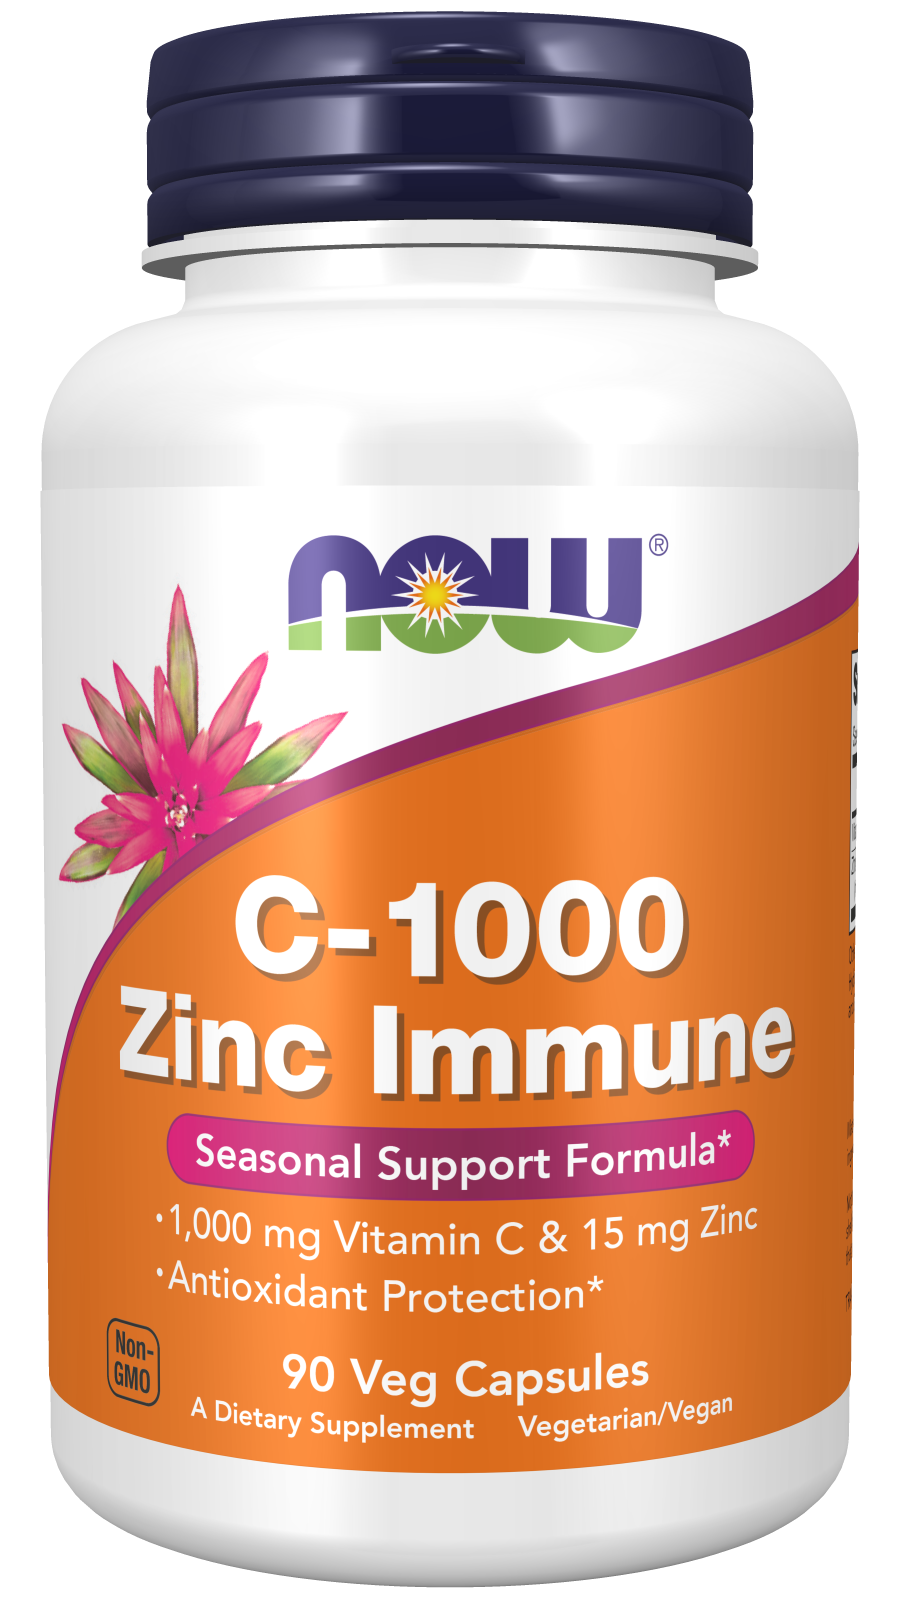 C-1000 Zinc Immune - 90 Veg Capsules Bottle Front